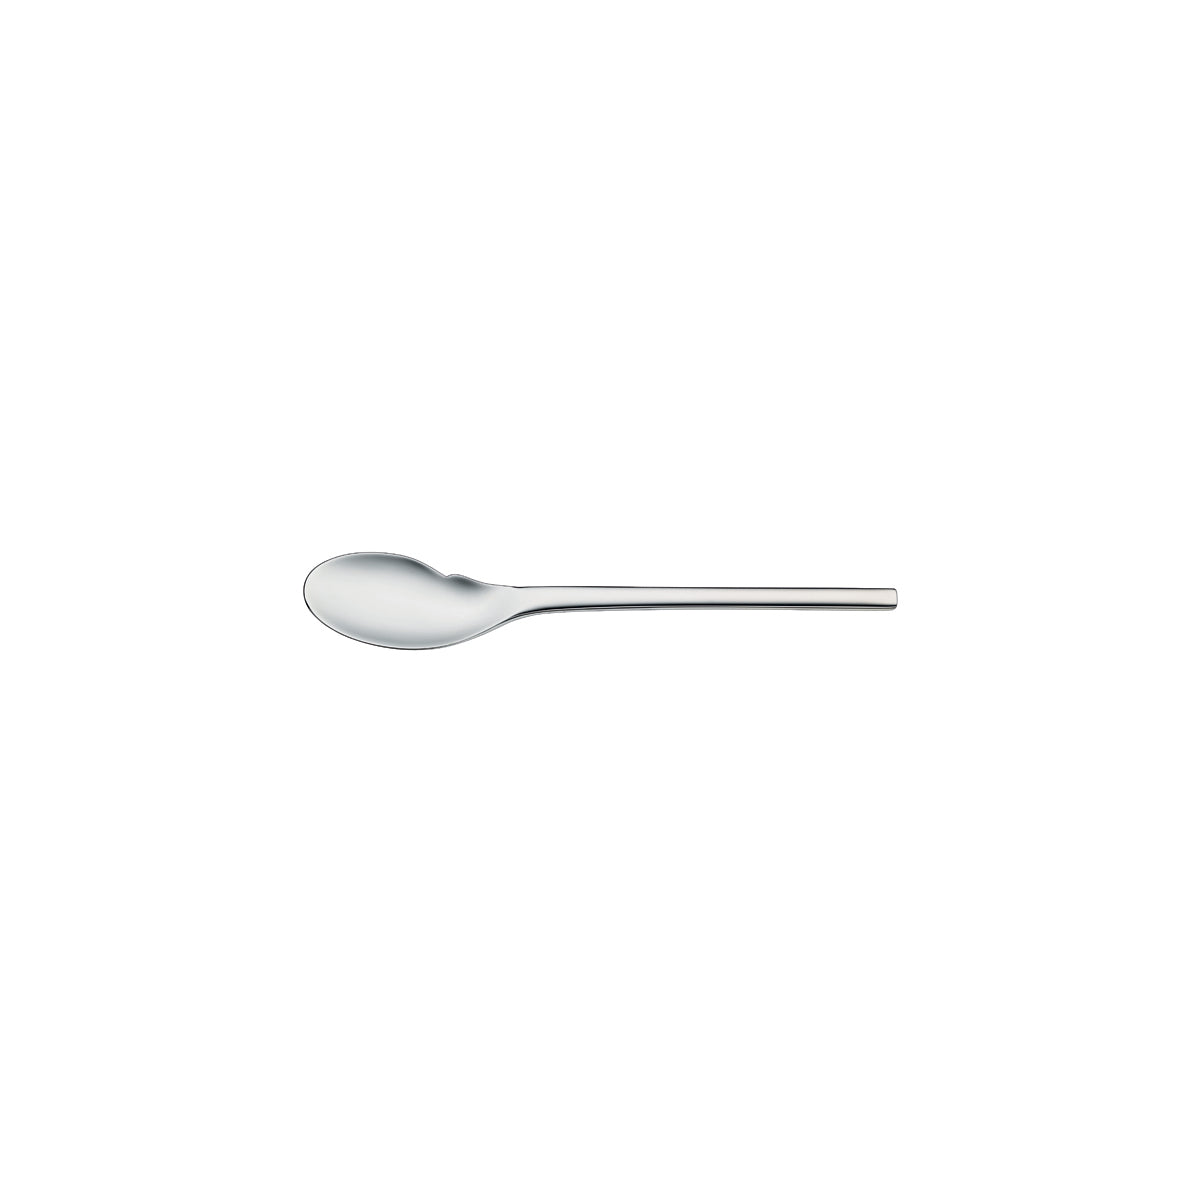 54.7211.6030 WMF Nordic Gourmet Spoon Silverplated Tomkin Australia Hospitality Supplies